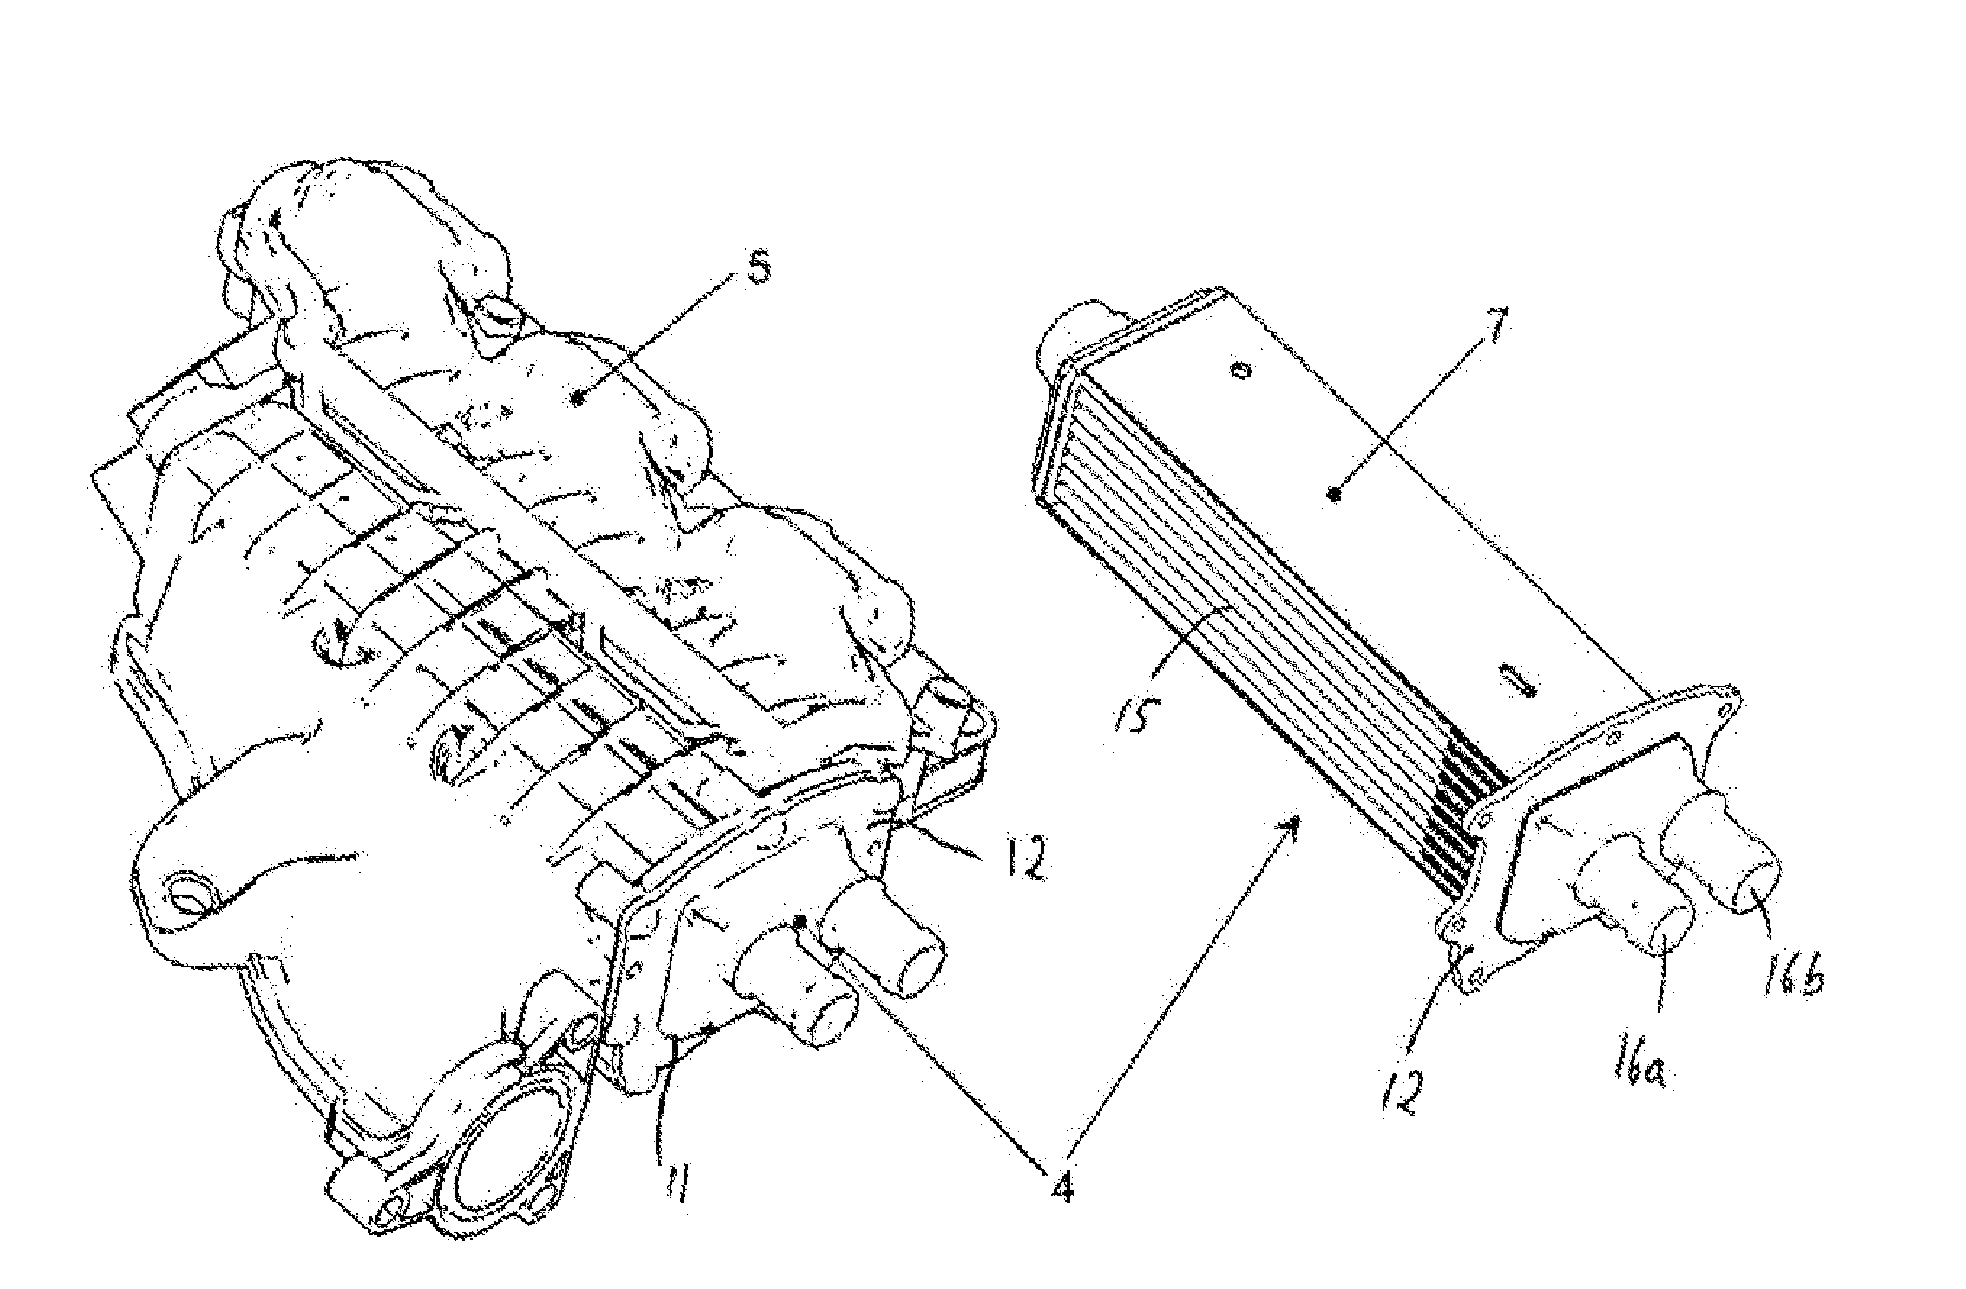 Arrangement of an intercooler in an intake pipe